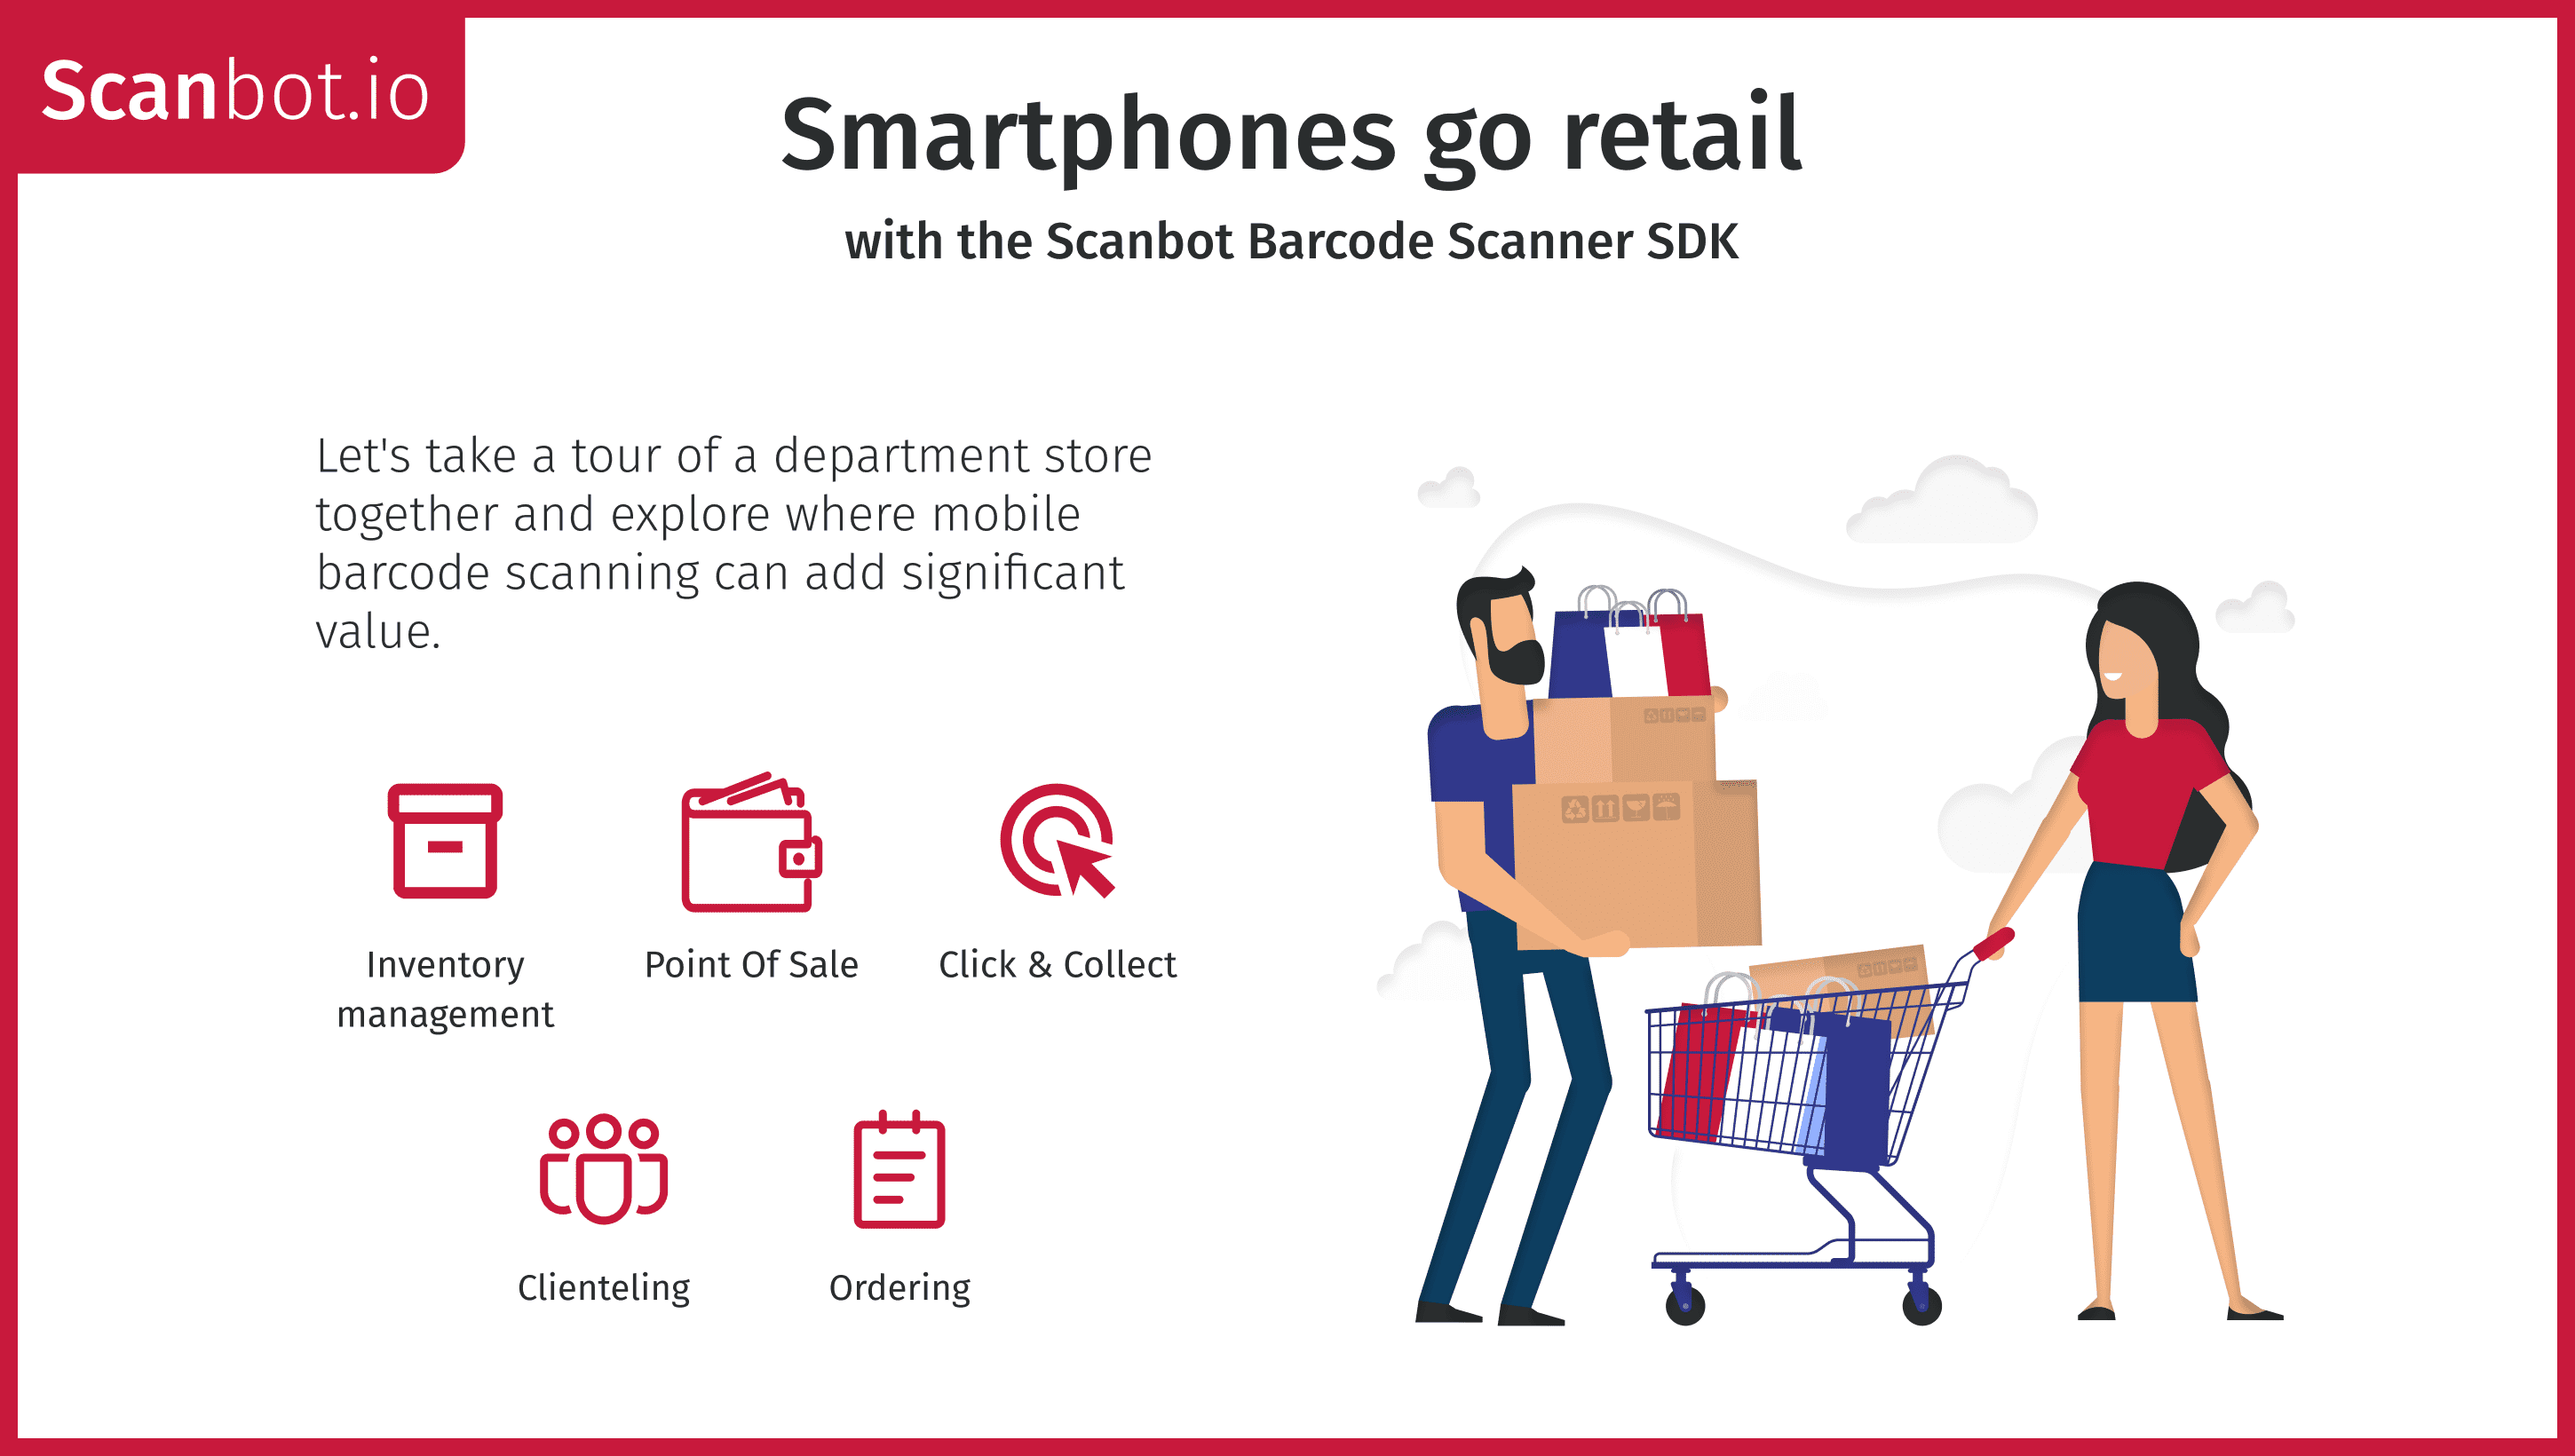 Smartphone scanning in retail